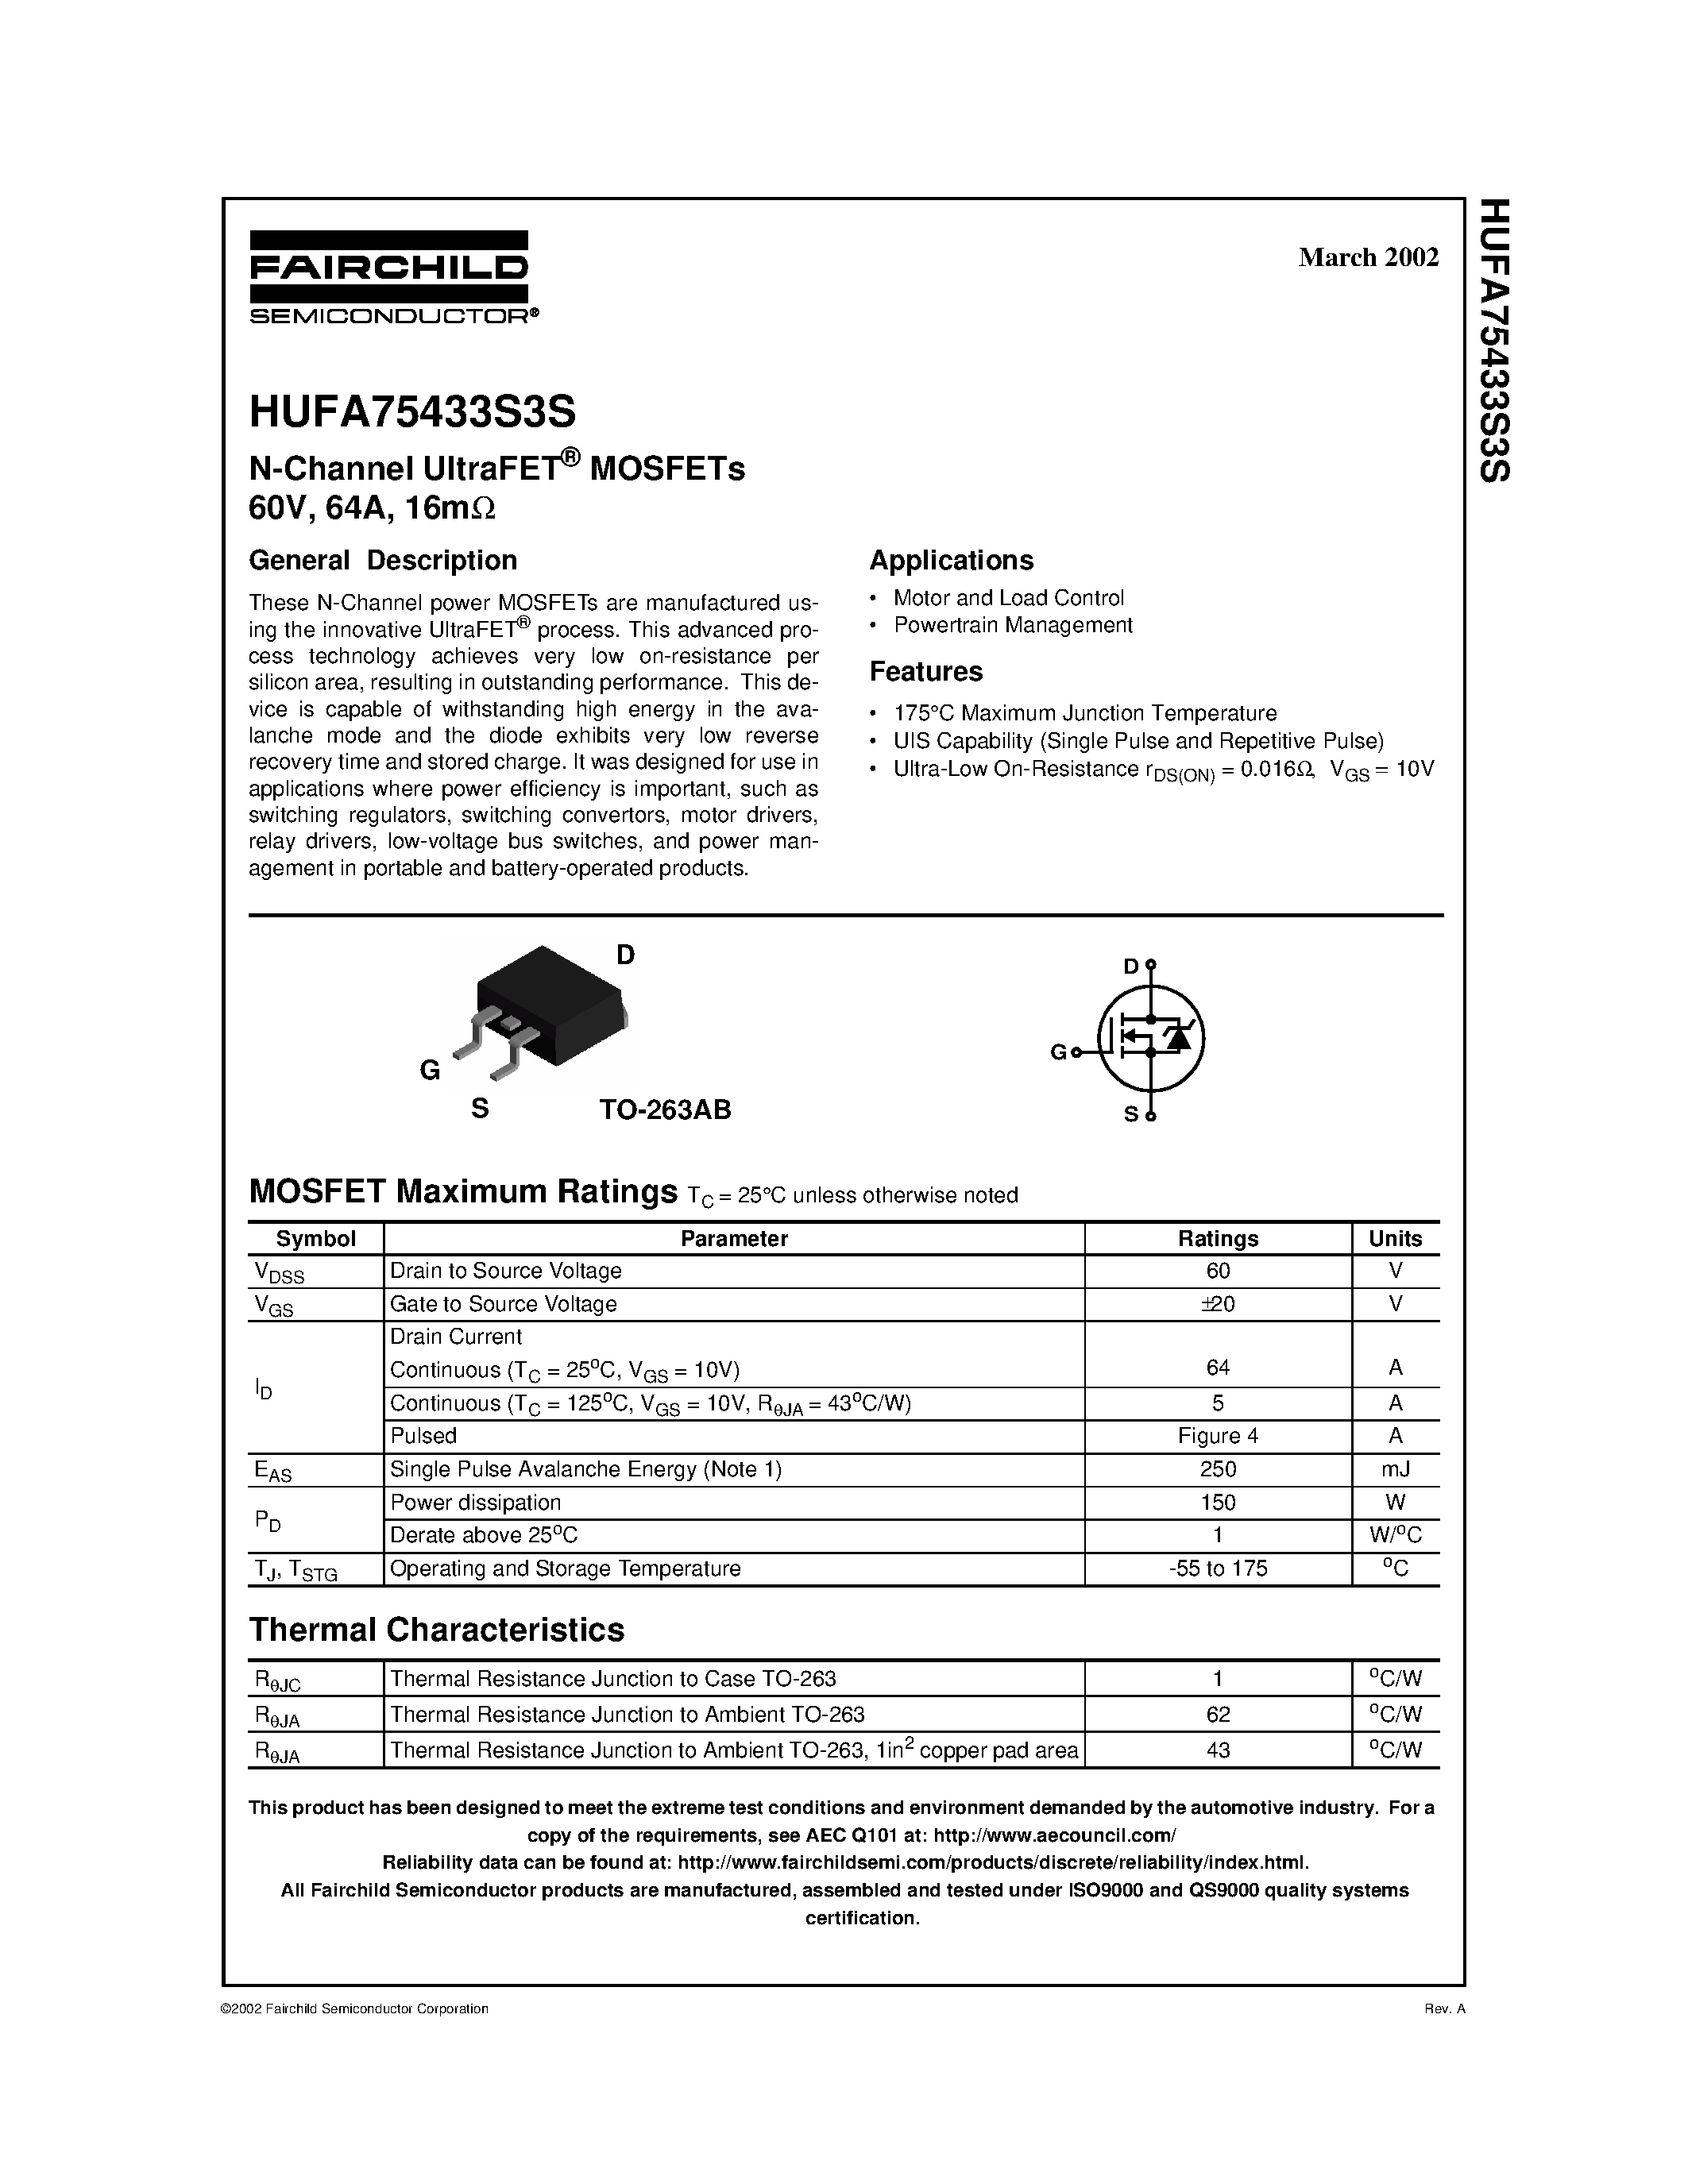 Даташит HUFA75433S3S - N-Channel UltraFET MOSFETs 60V/ 64A/ 16m страница 1